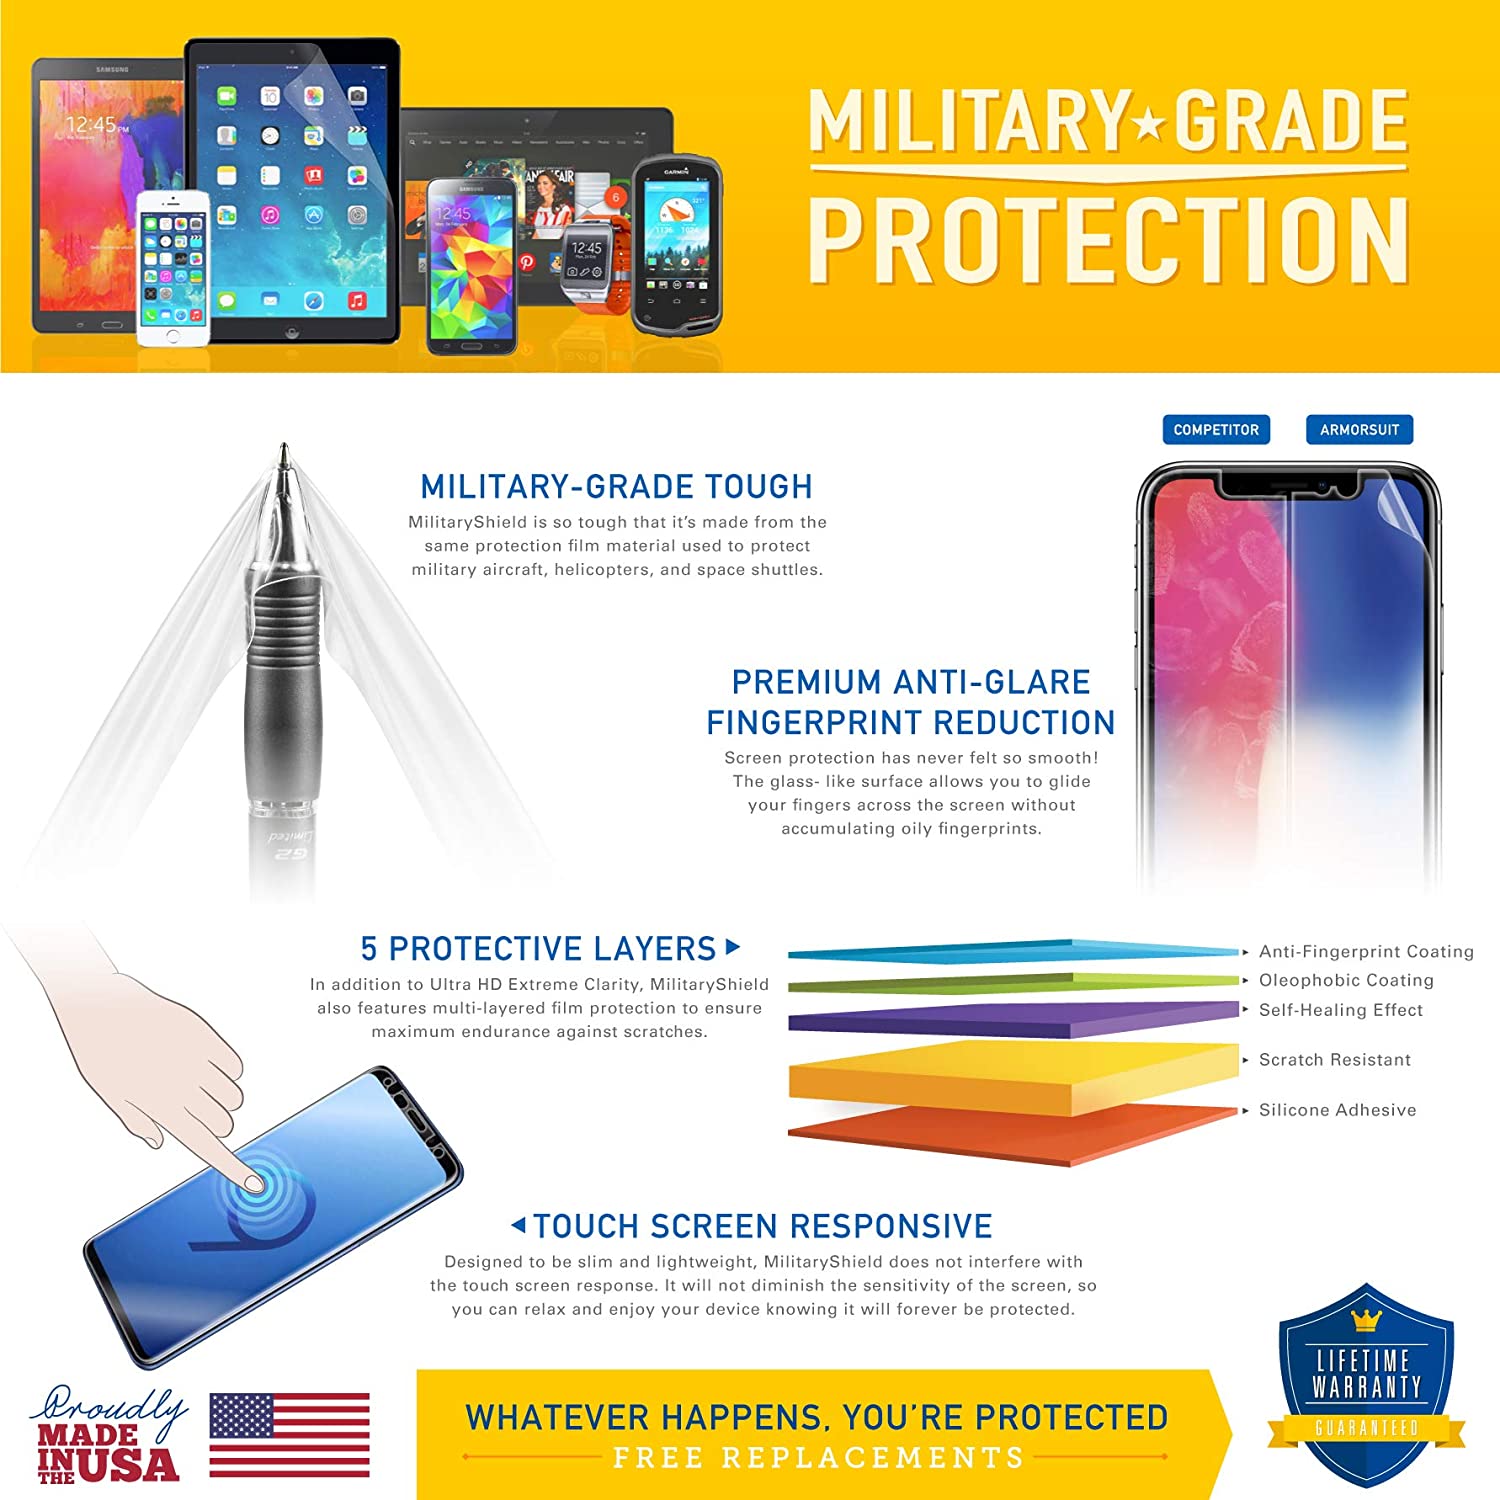 [2-Pack] Samsung Galaxy J3 (2017) Screen Protector